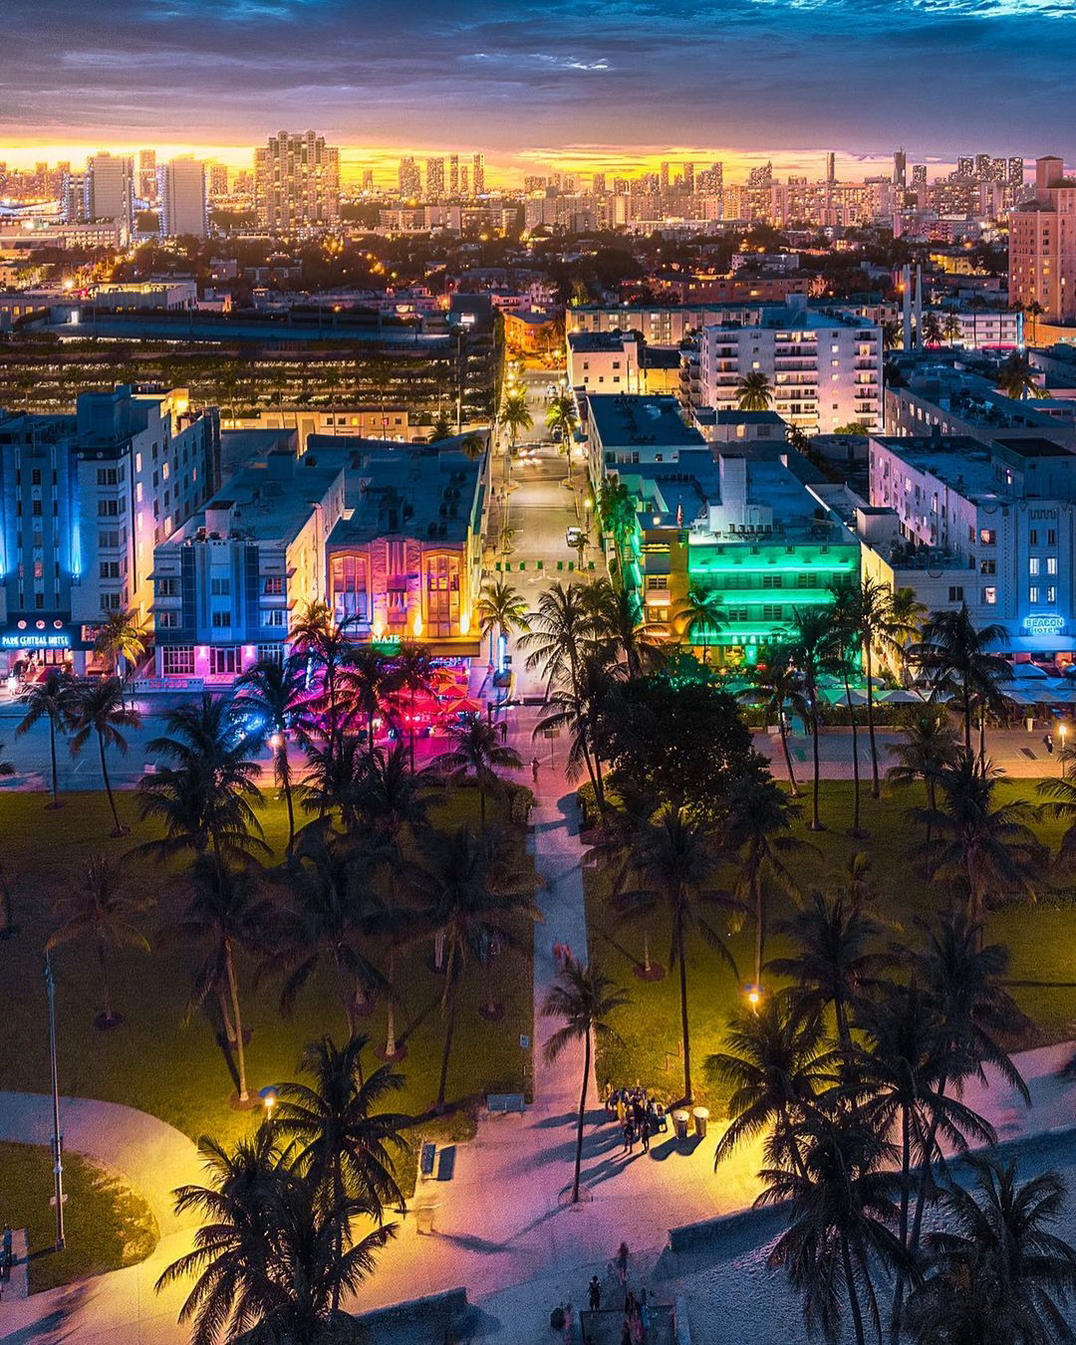 Miami | Travel community - What’s your favorite Miami Spot